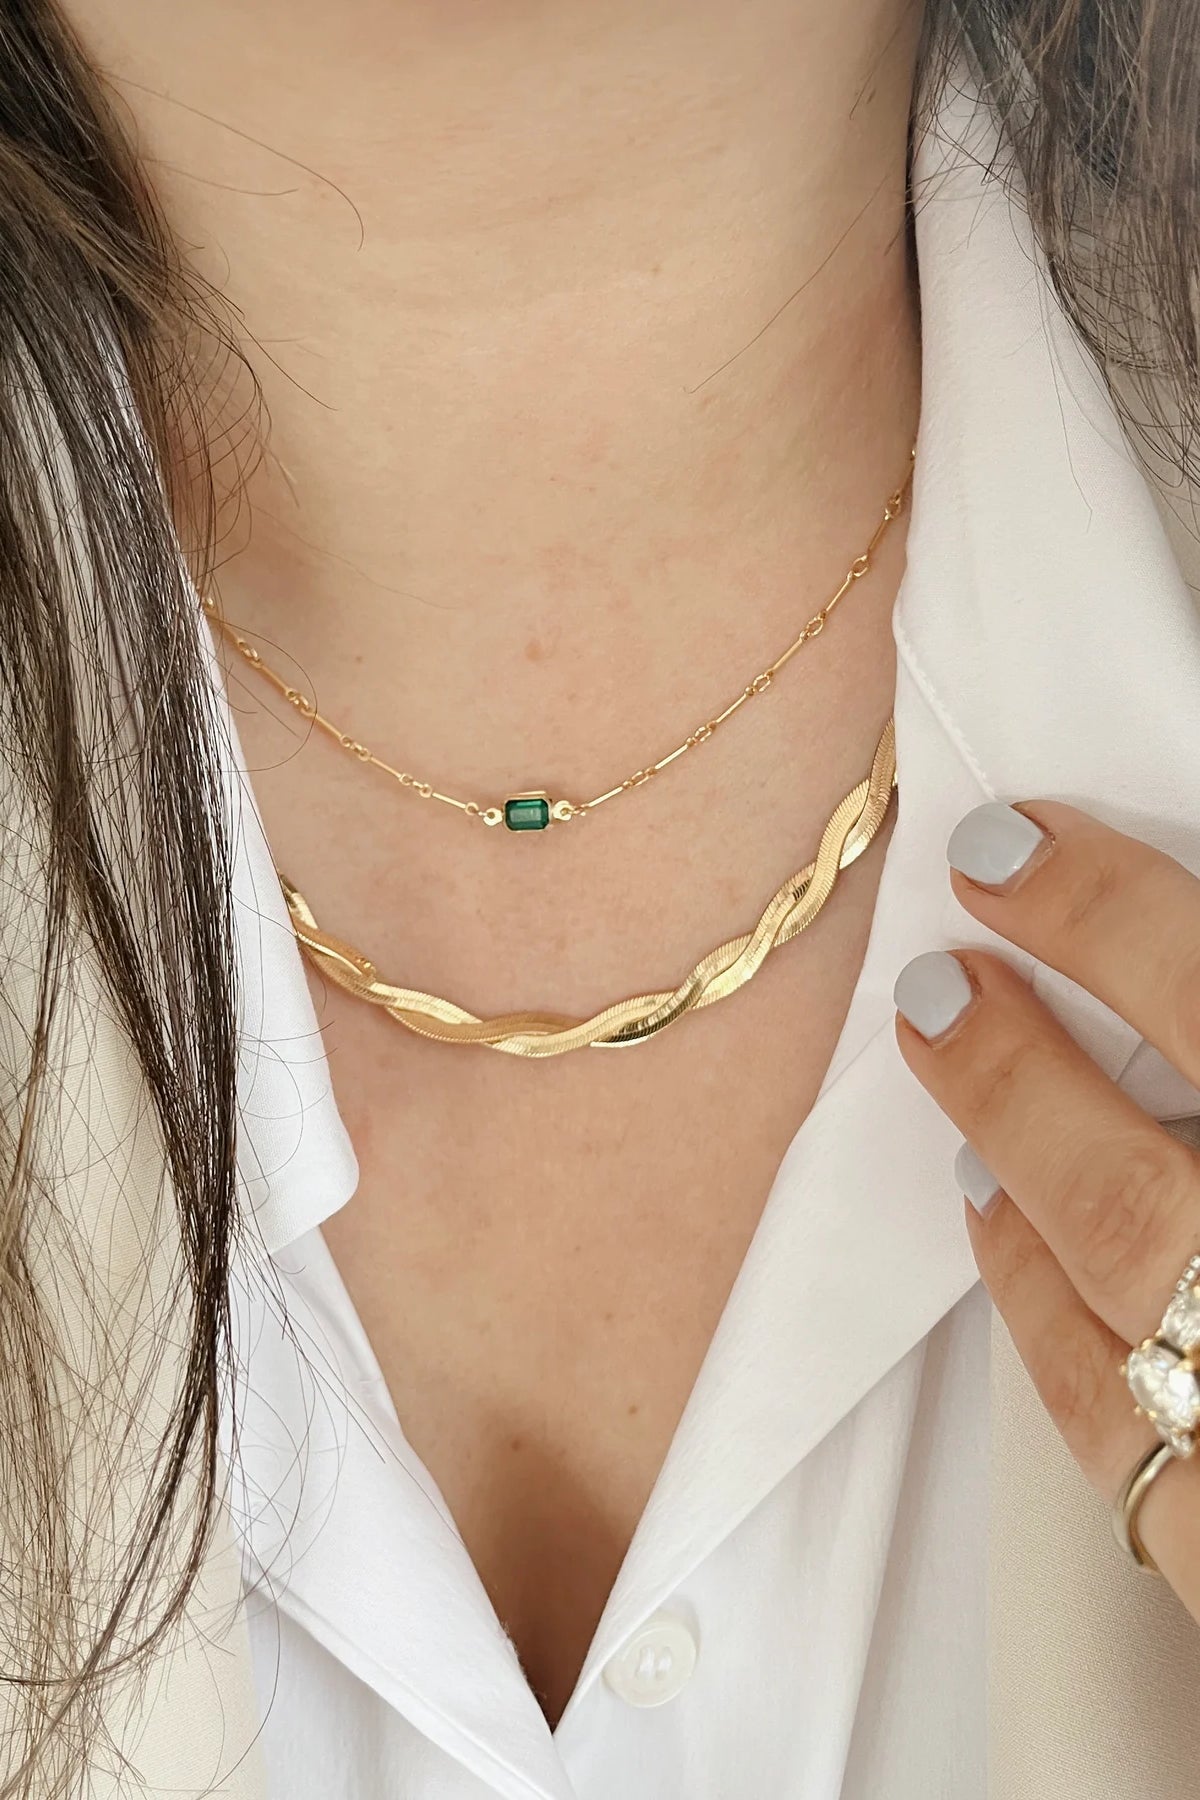 The gem pendant necklace - emerald